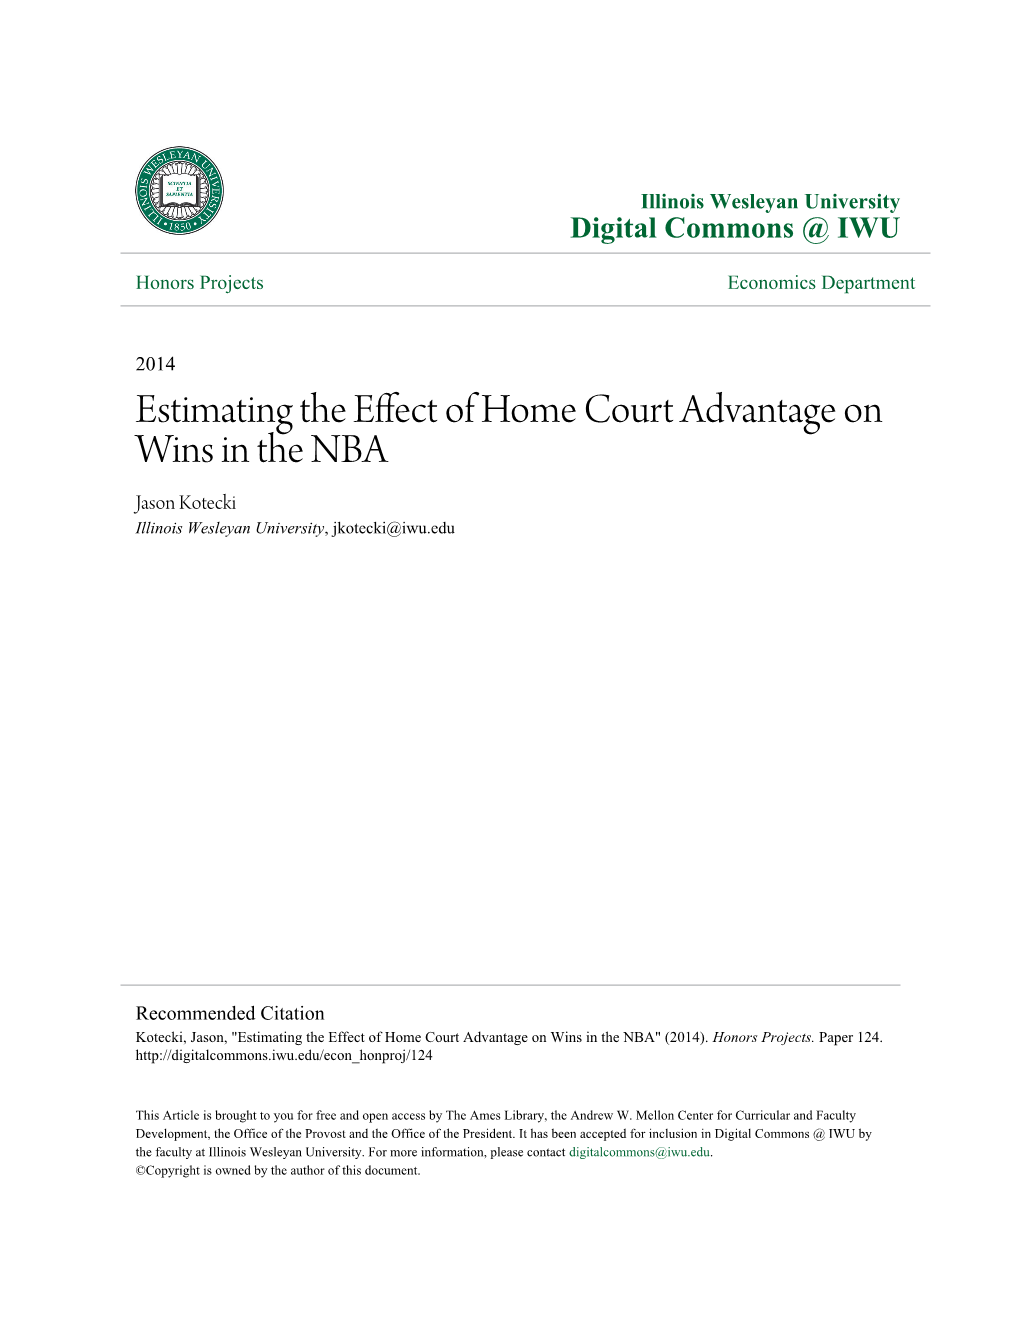 Estimating the Effect of Home Court Advantage on Wins in the NBA Jason Kotecki Illinois Wesleyan University, Jkotecki@Iwu.Edu